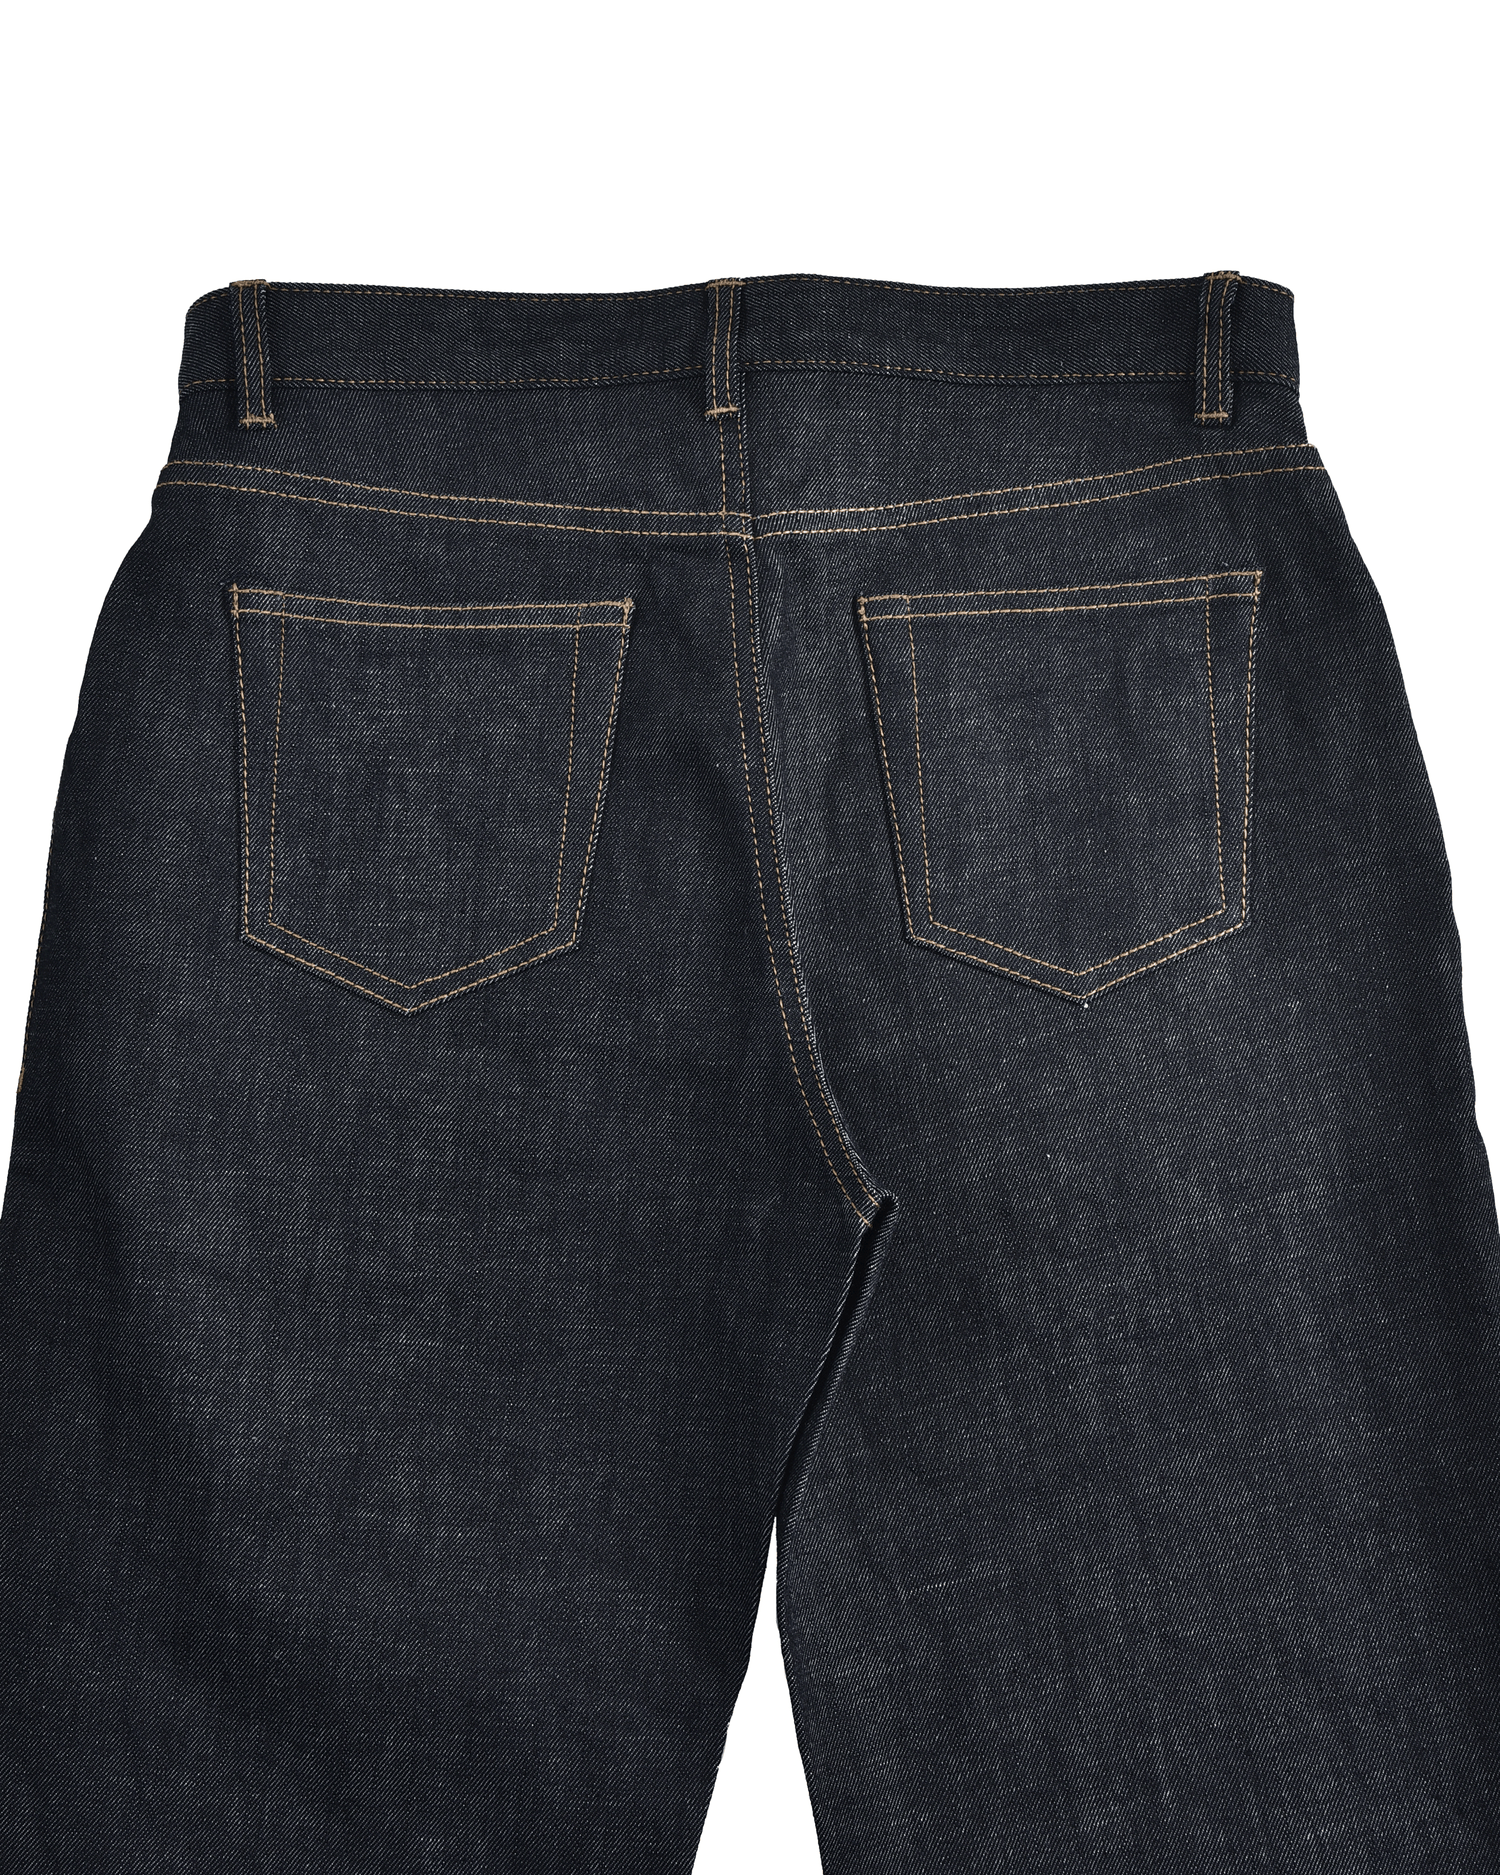 Back view of custom denim jeans for men by Luxire in dark indigo